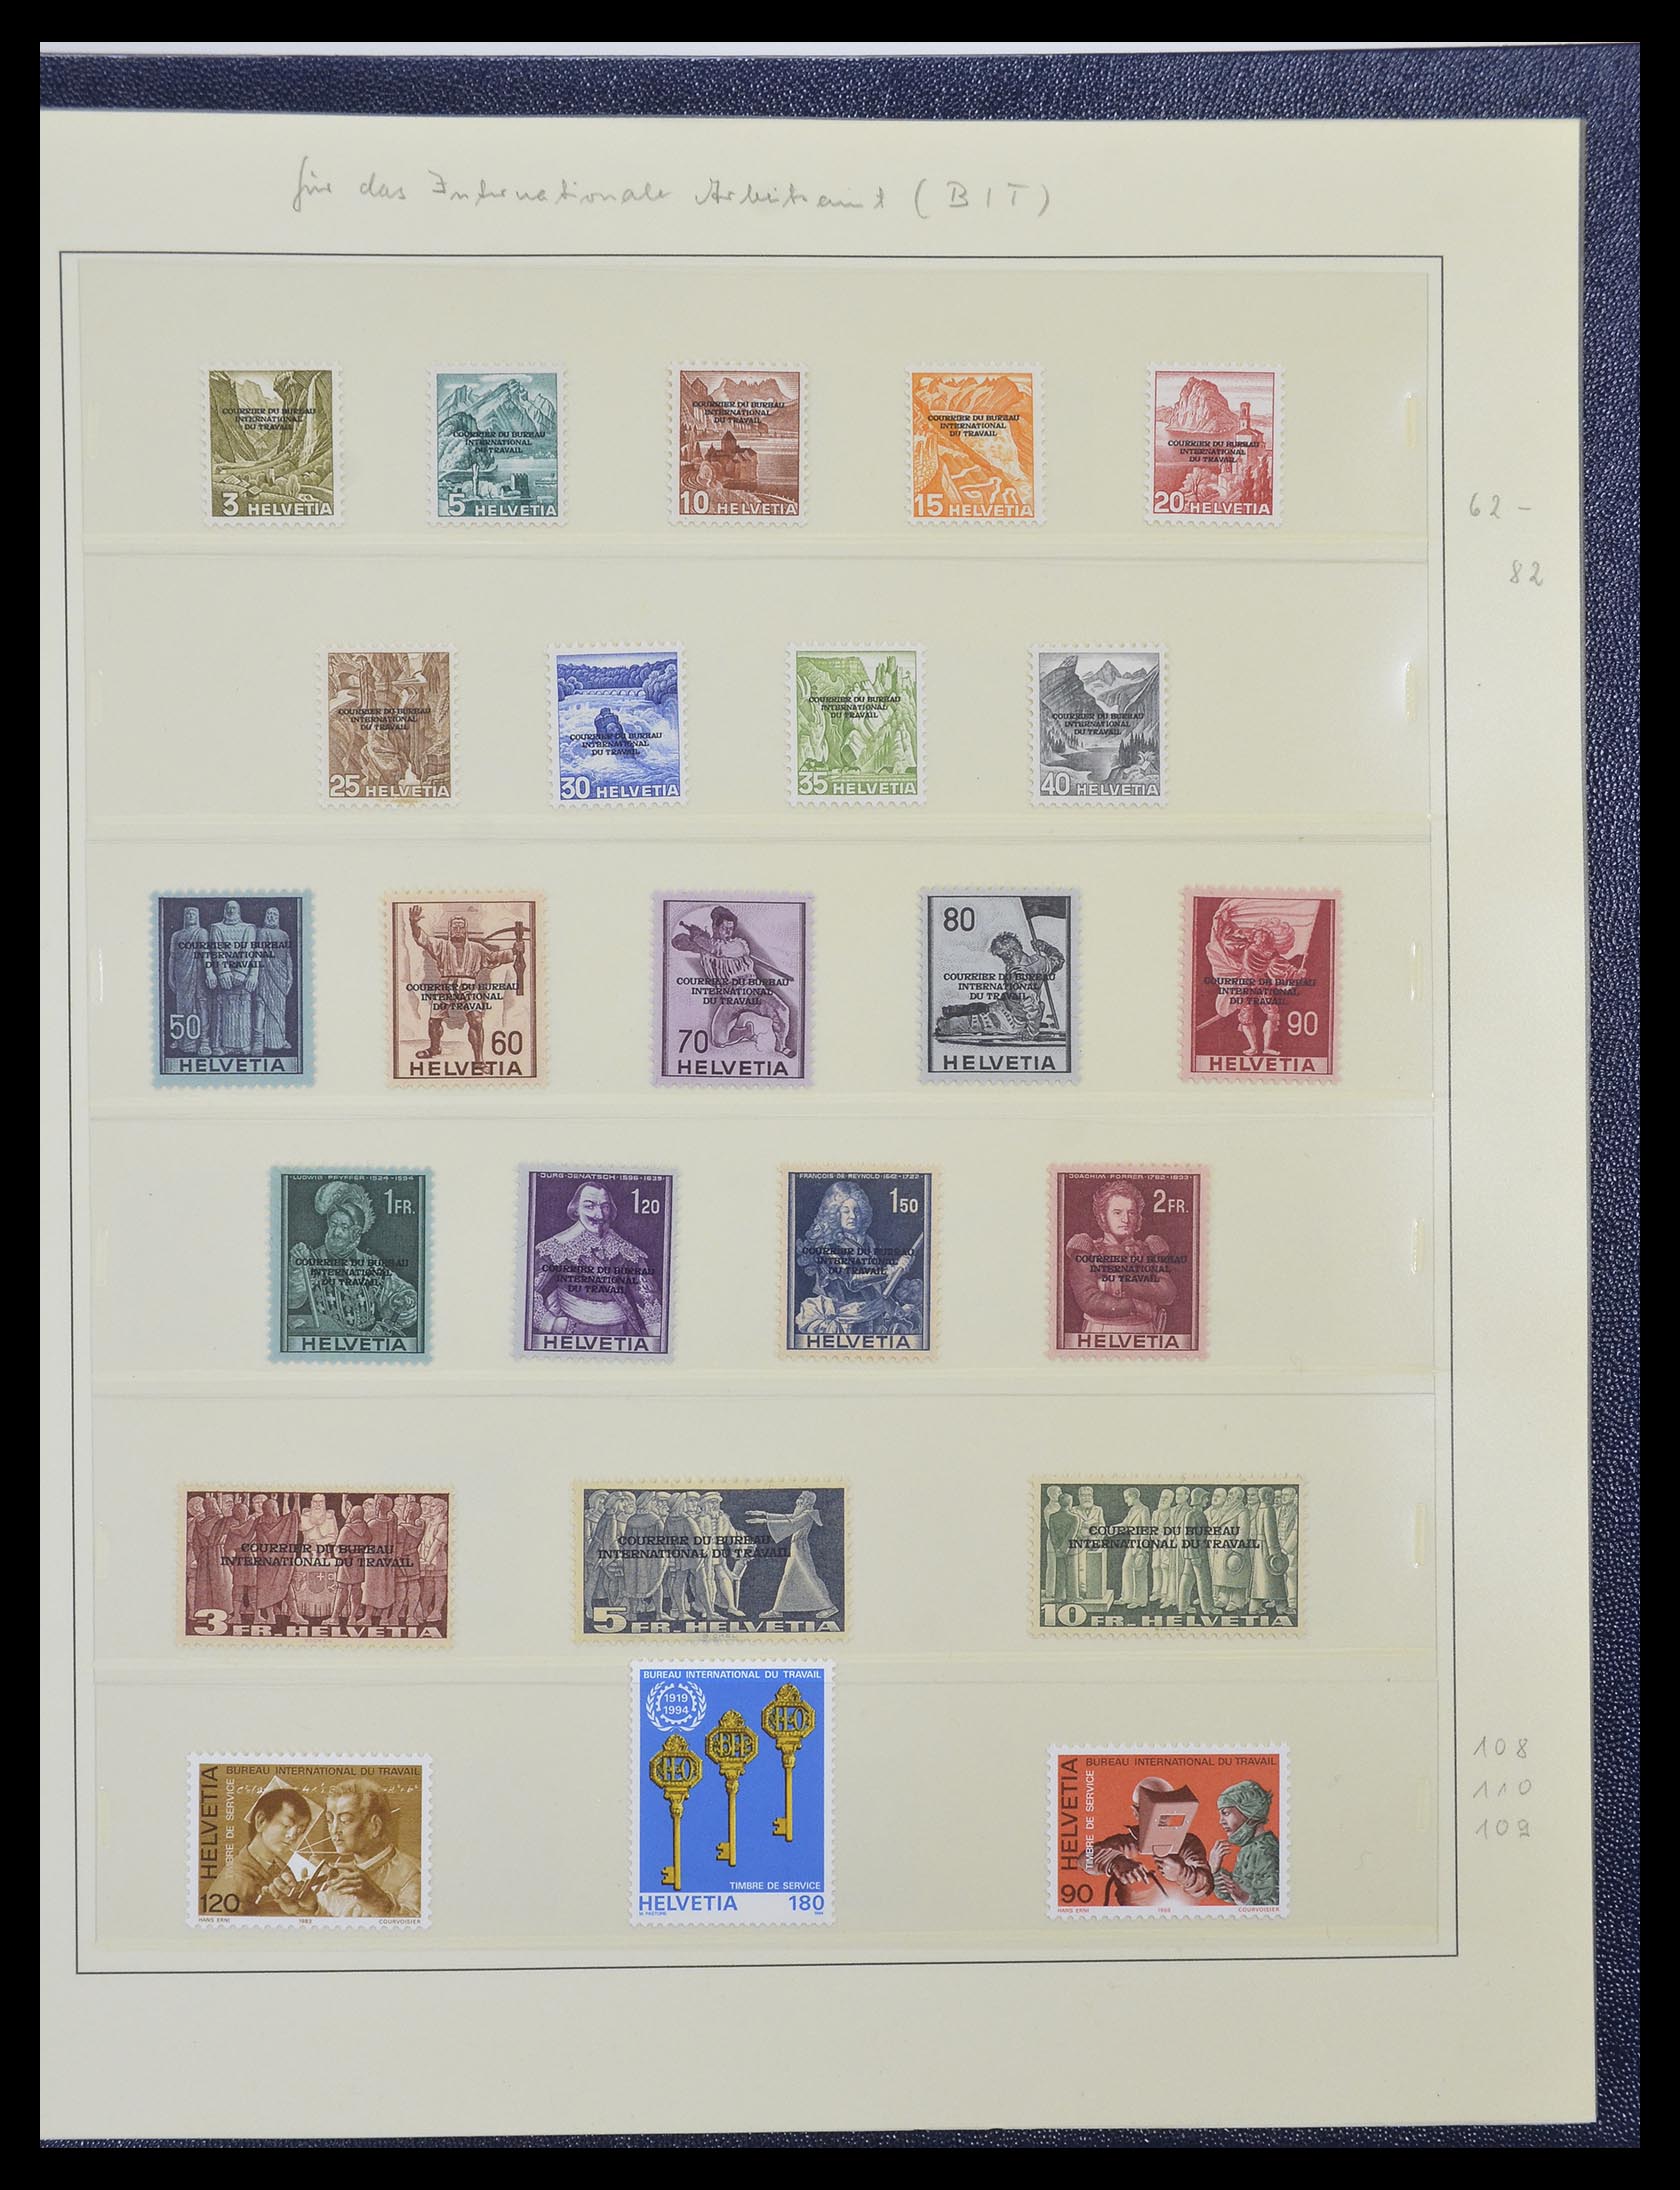 33137 011 - Stamp collection 33137 Switzerland service 1922-2008.